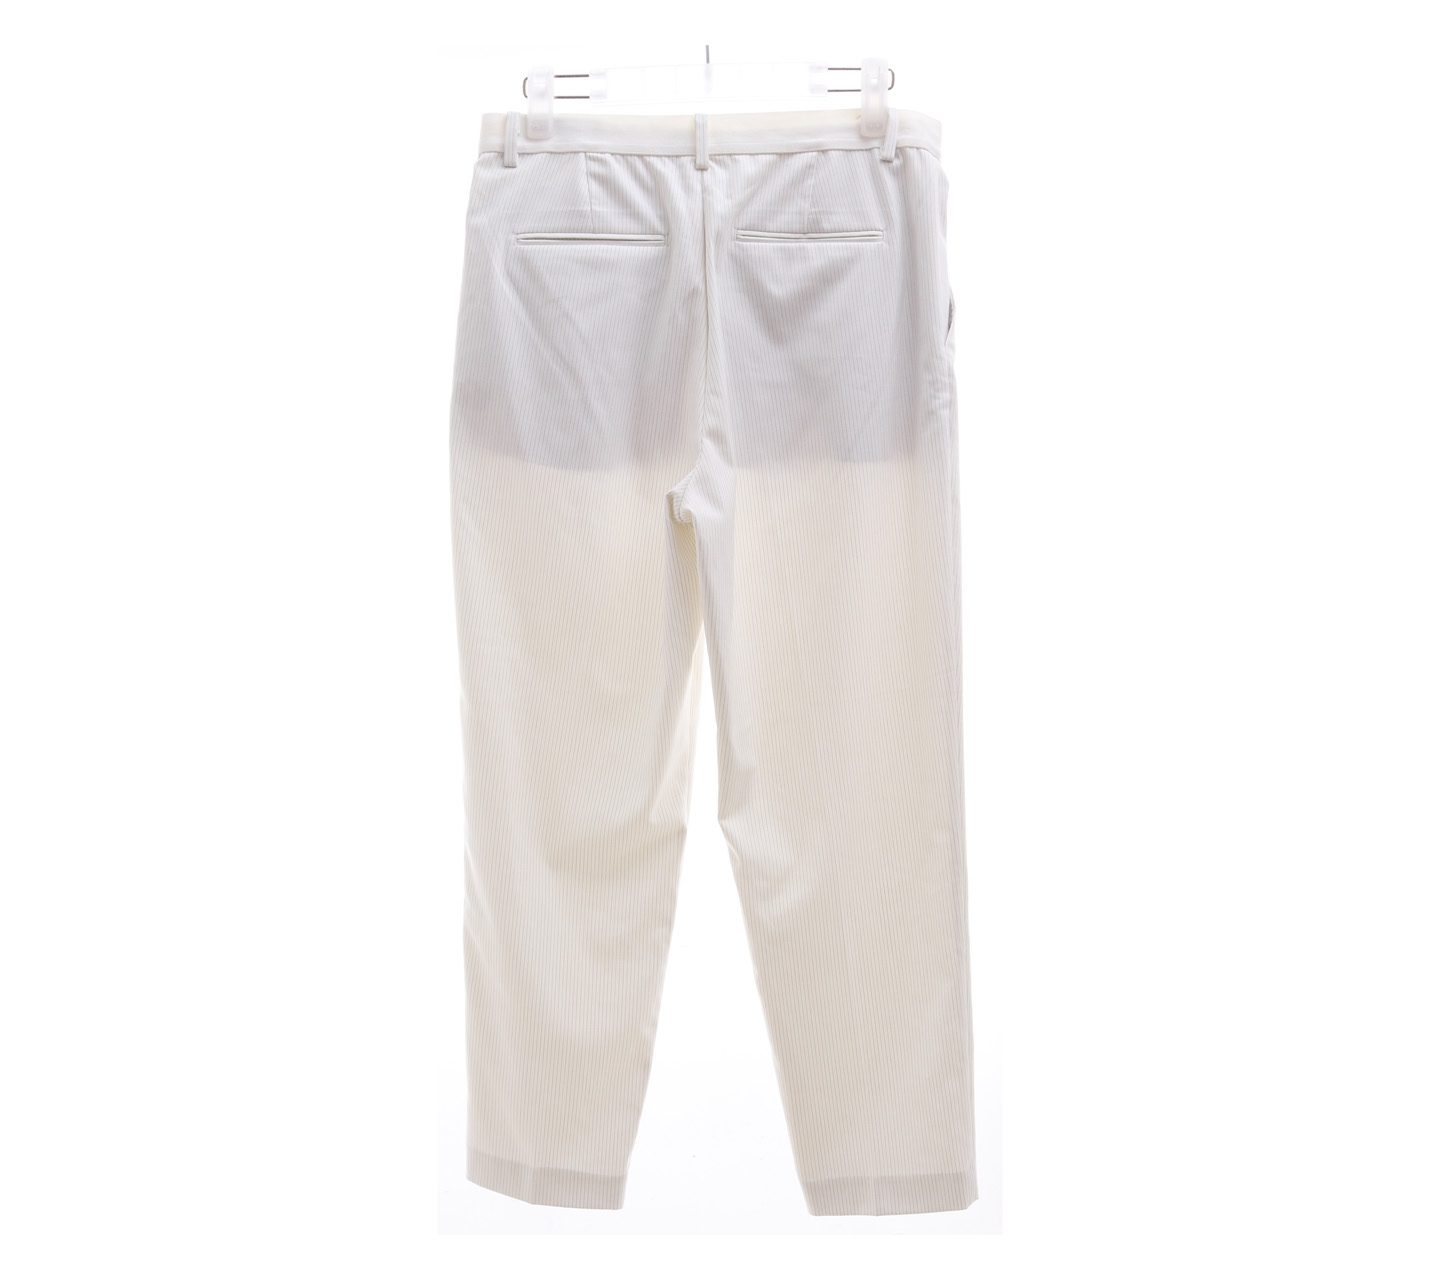 Uniqlo White & Grey Striped Long Pants 